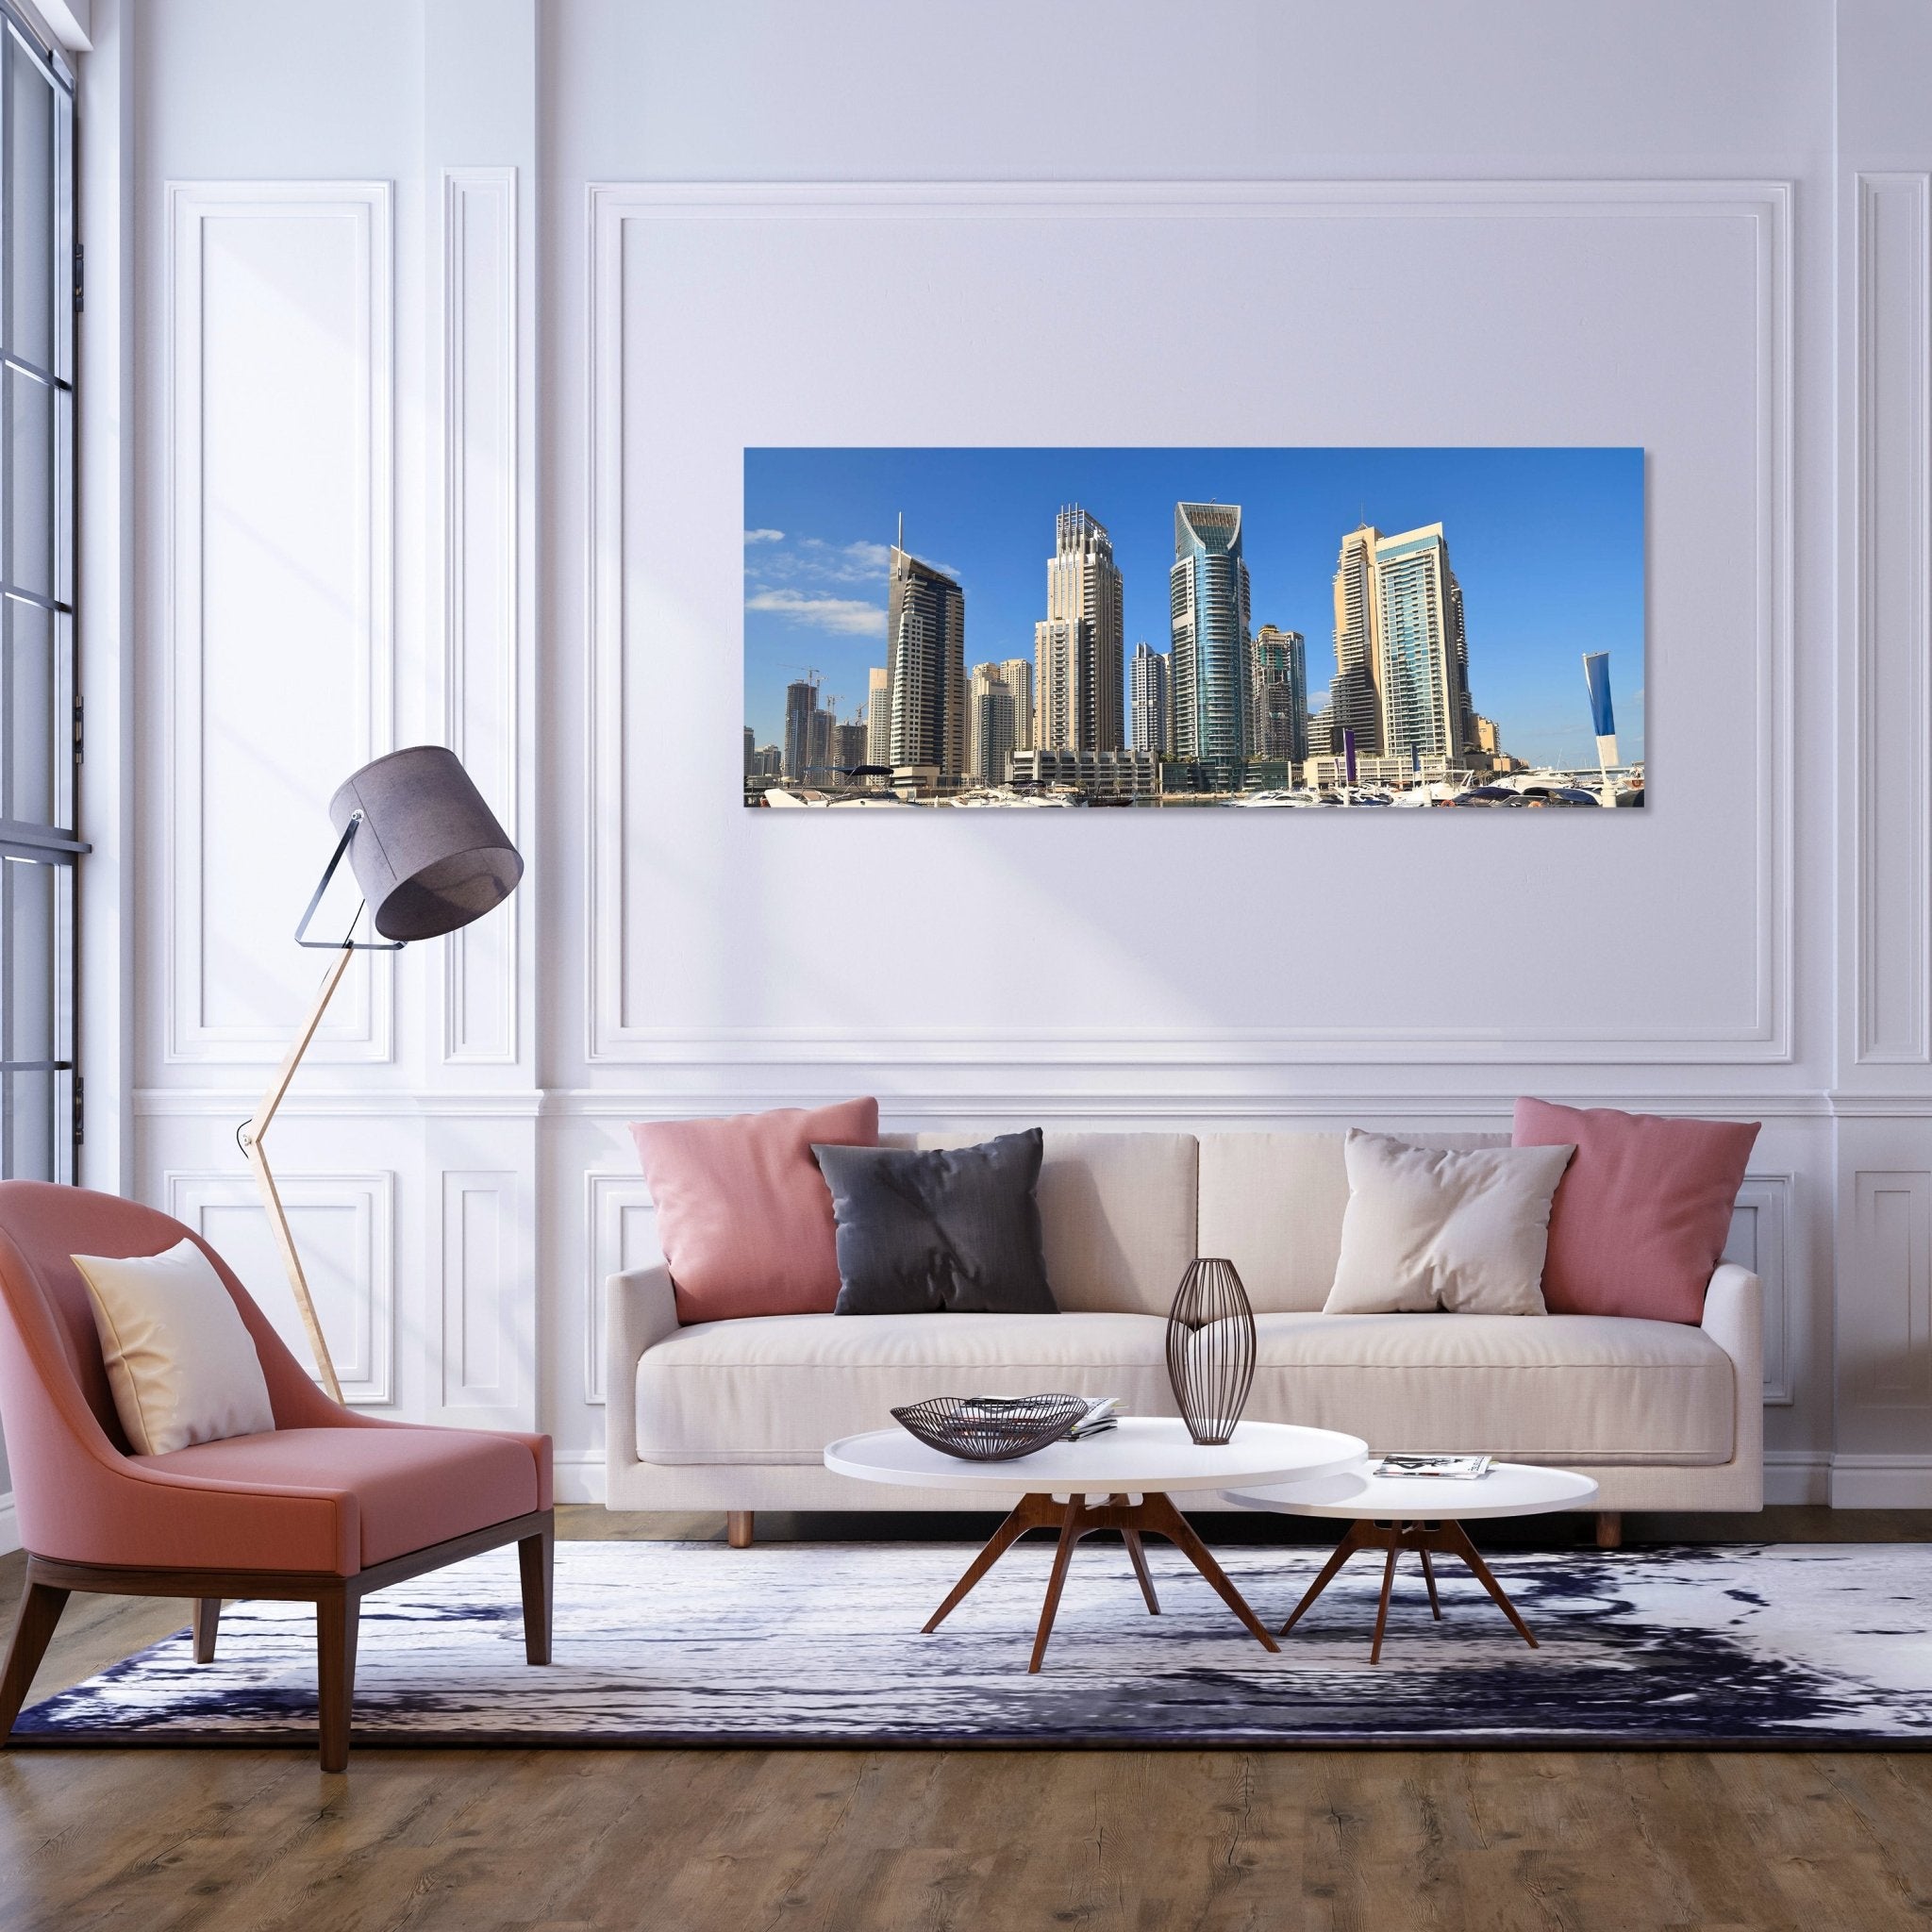 Leinwandbild Dubai Skyline M0342 kaufen - Bild 2